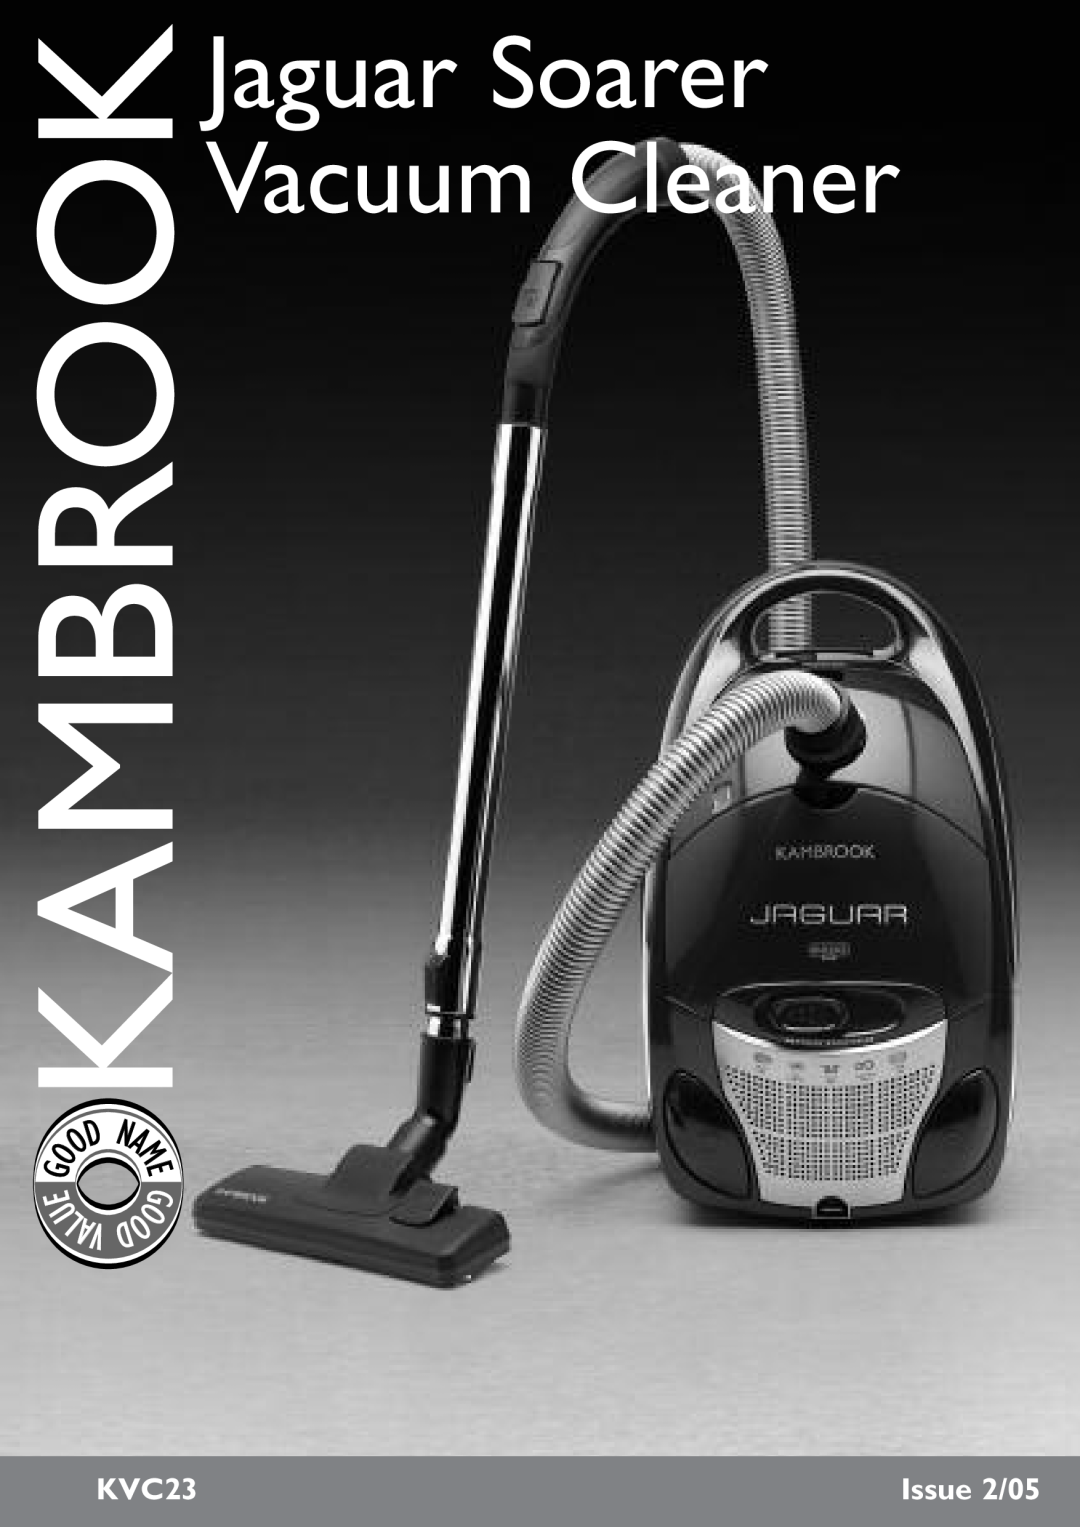 Kambrook KVC23 manual U Lav, Jaguar Soarer Vacuum Cleaner, Issue 2/05 